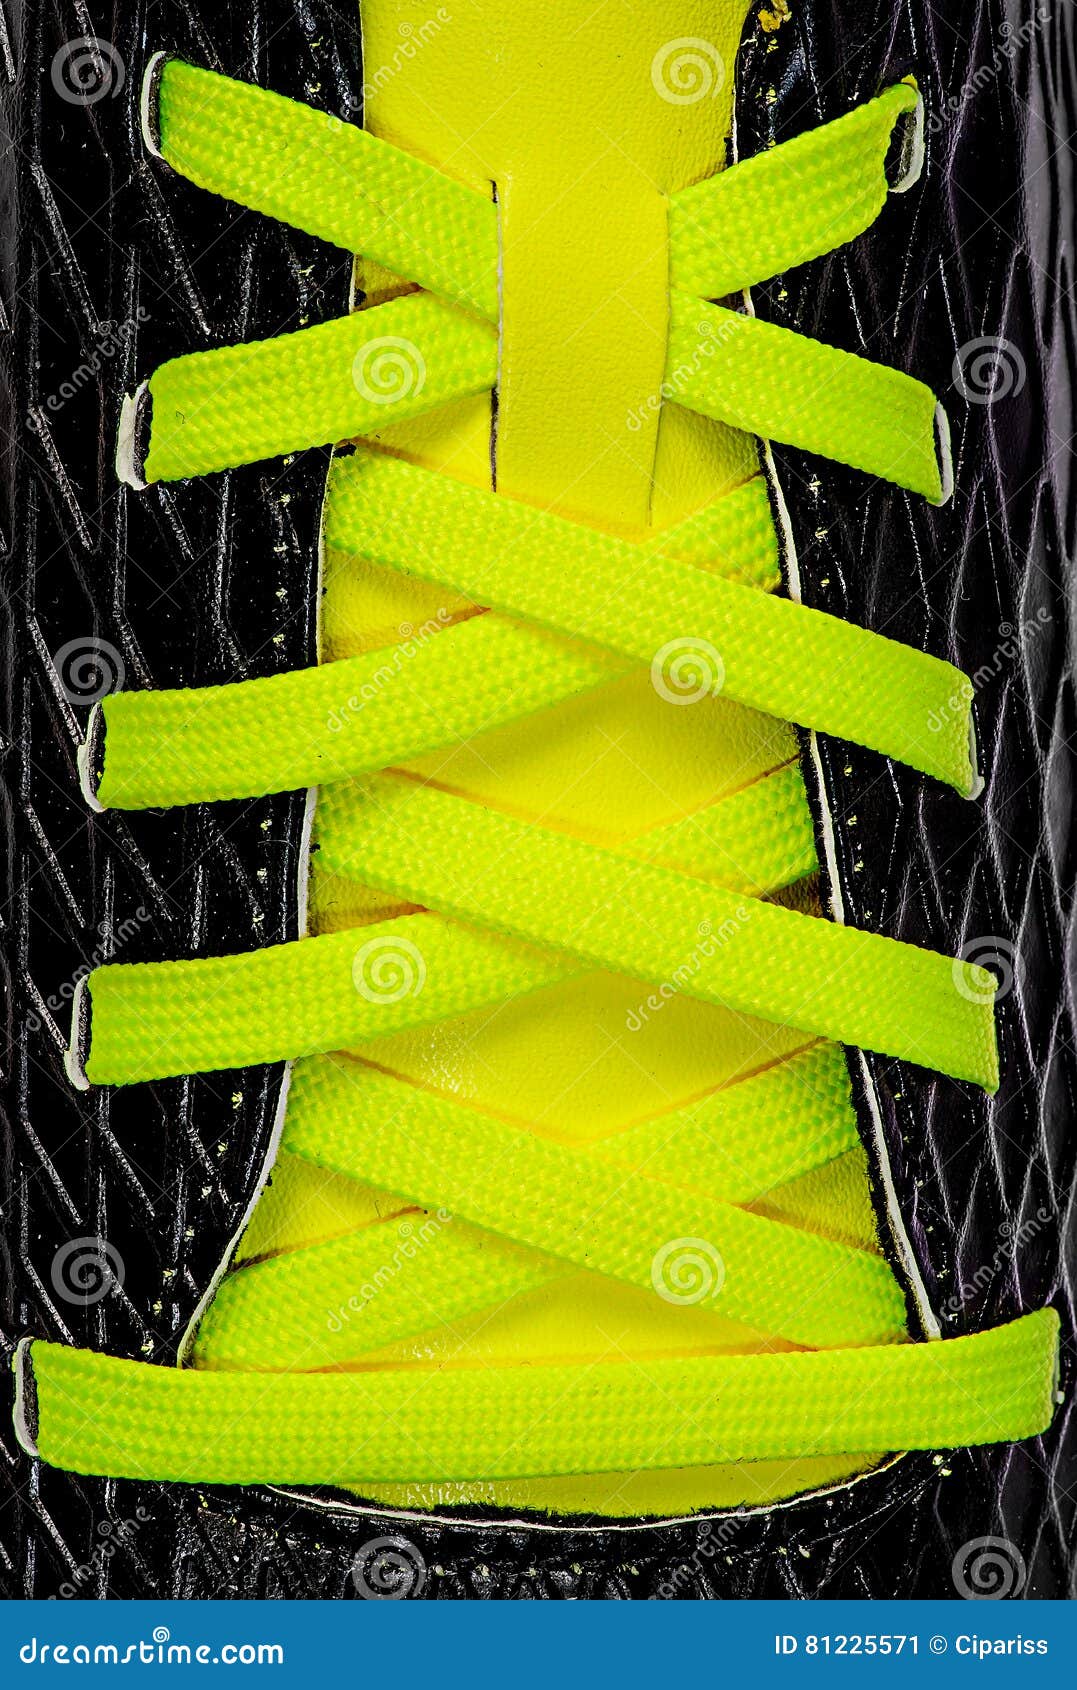 Closeup of yellow laces stock image. Image of footgear - 81225571